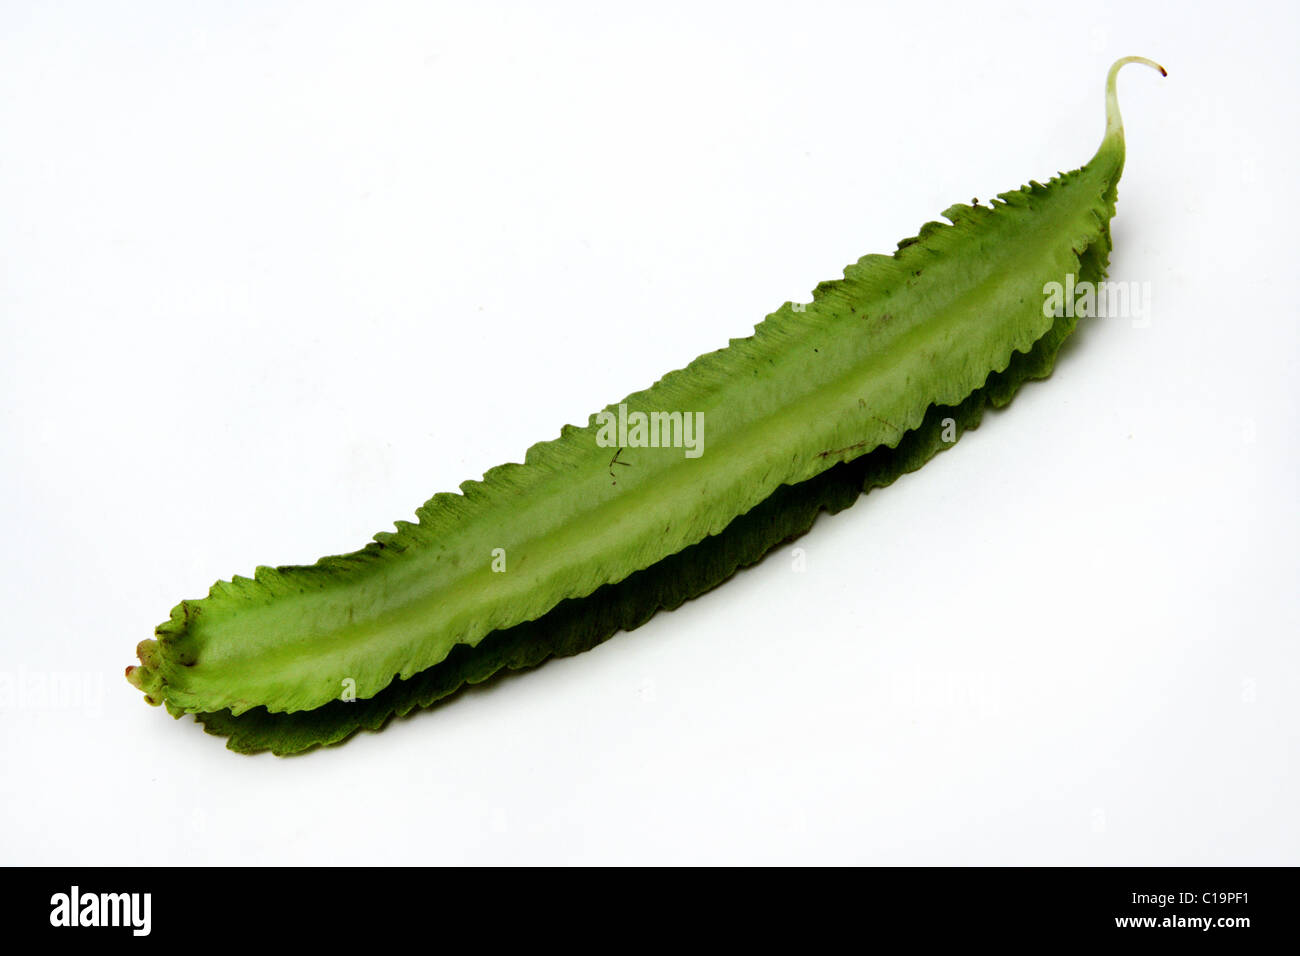 Wing Bean (Tua Poo) or Lotus tetragonolobus Stock Photo